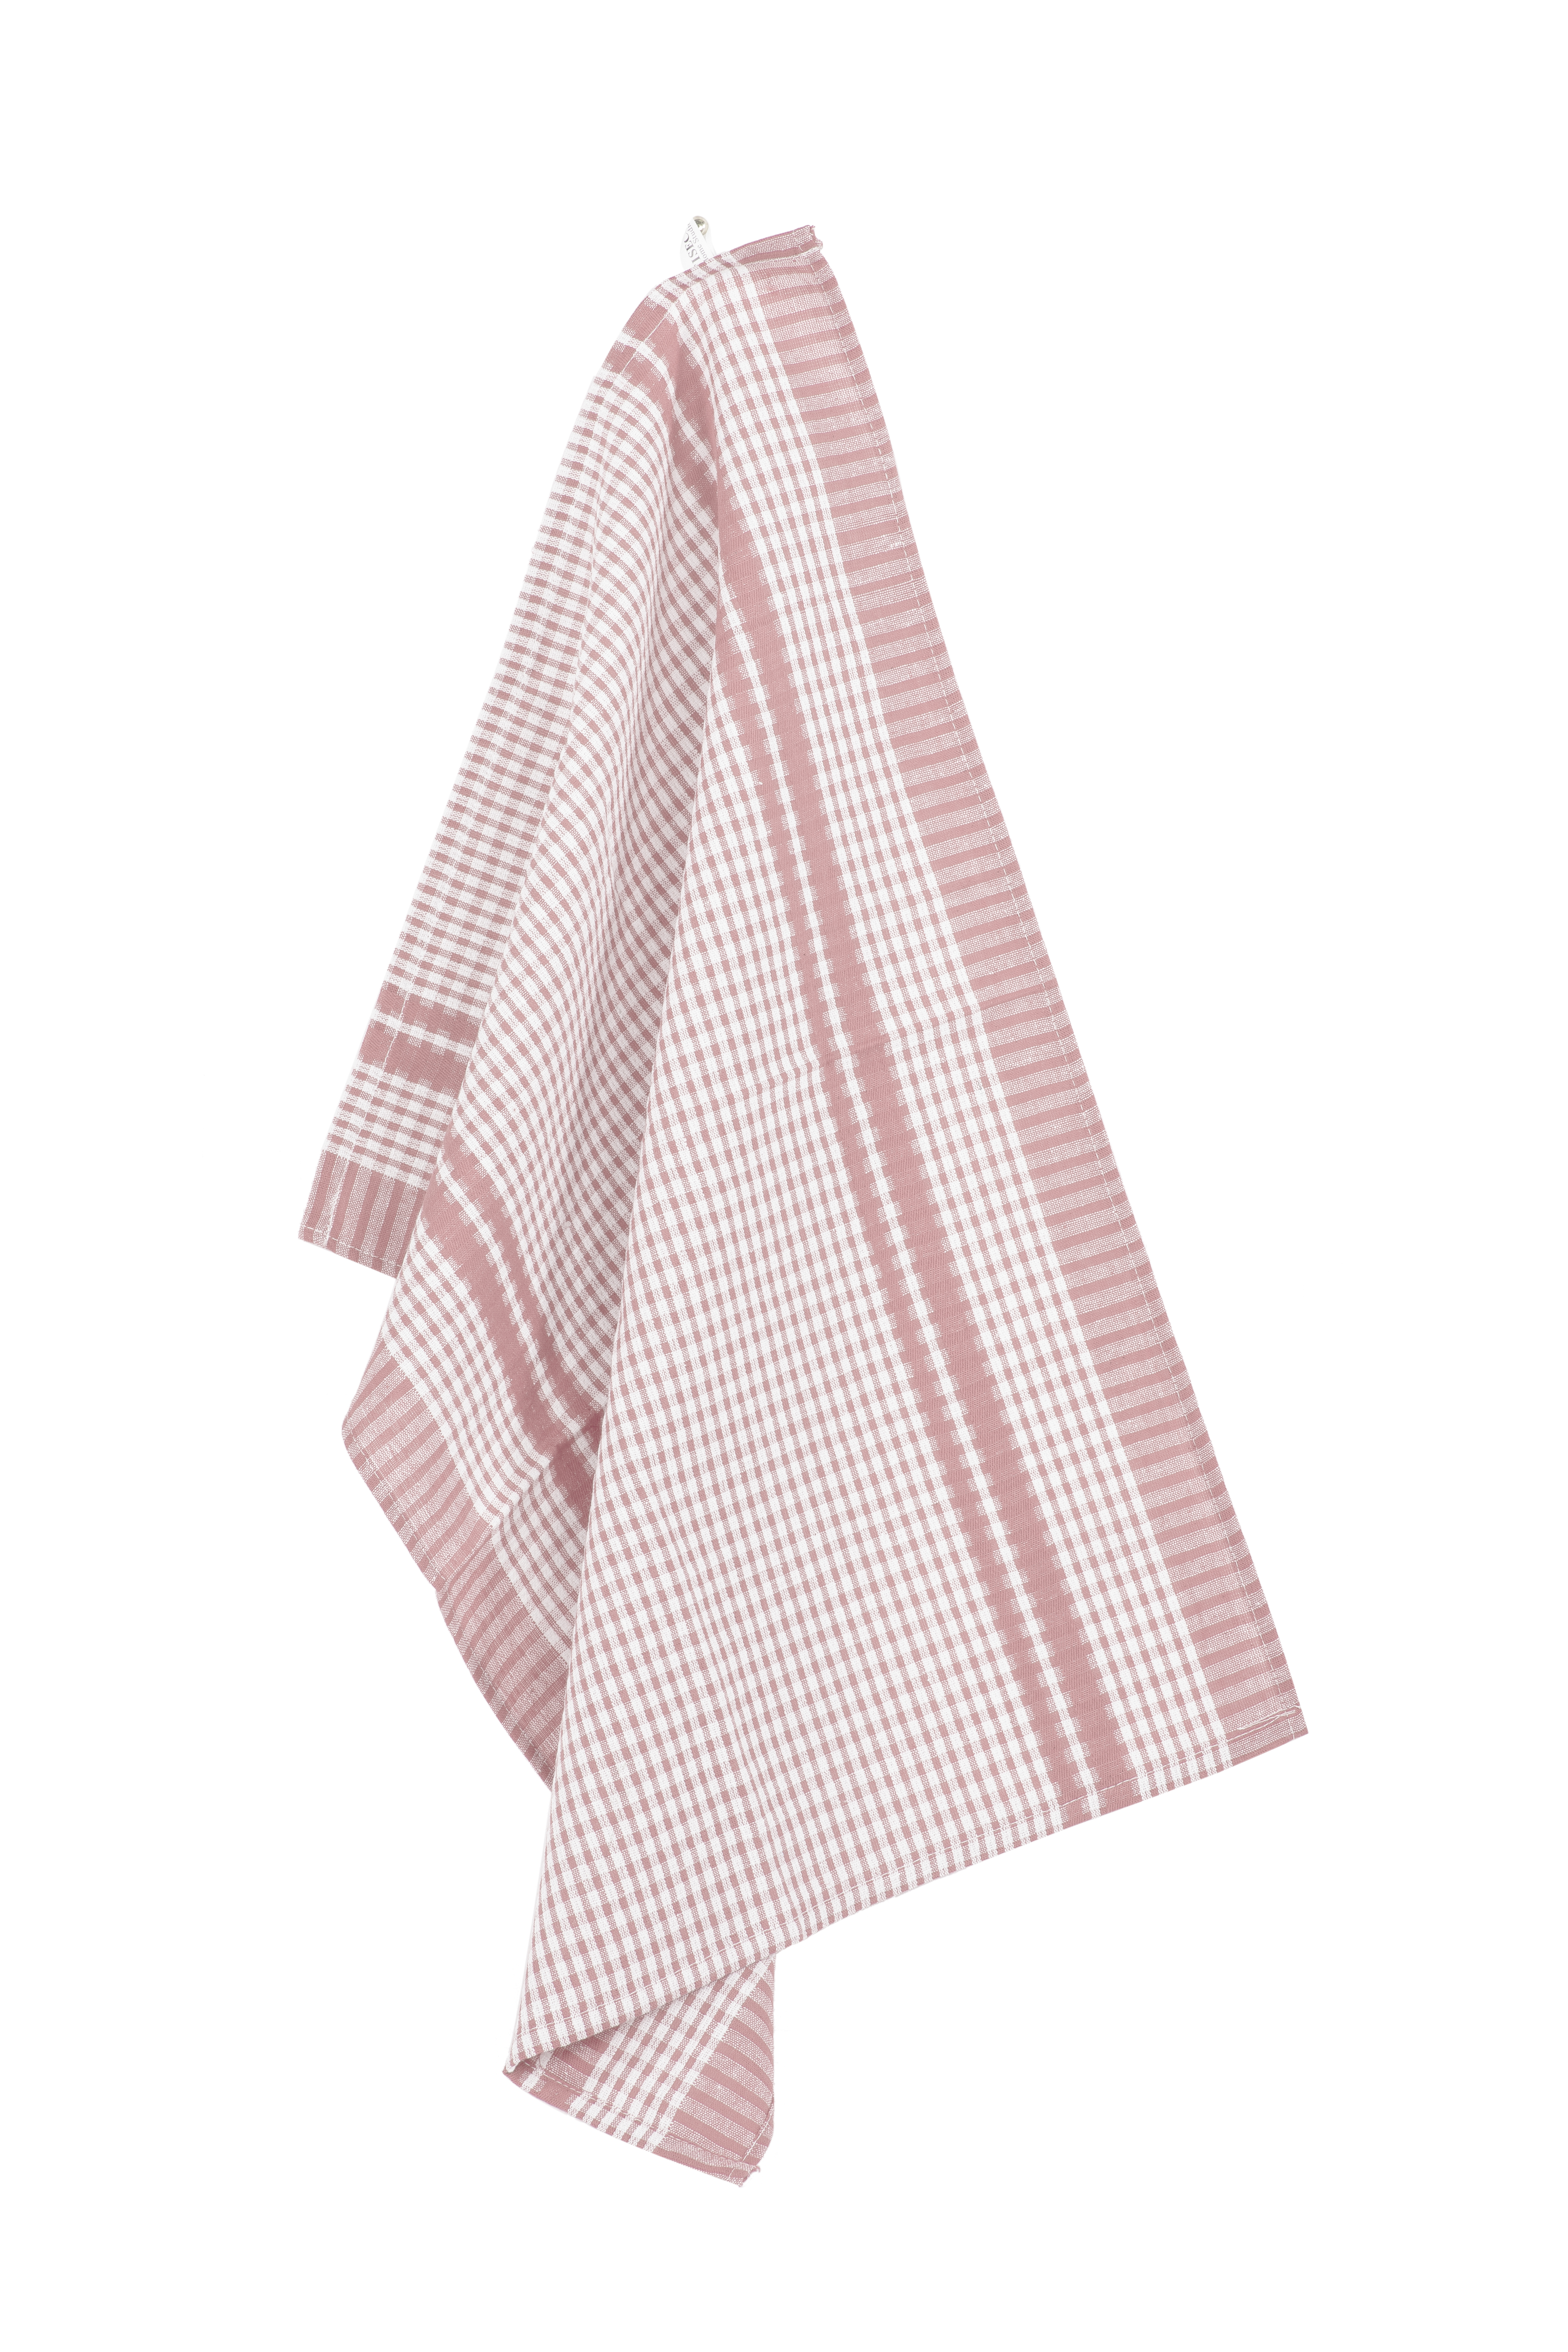 Torchon WAFFLE 50x70cm - set/4 - pink